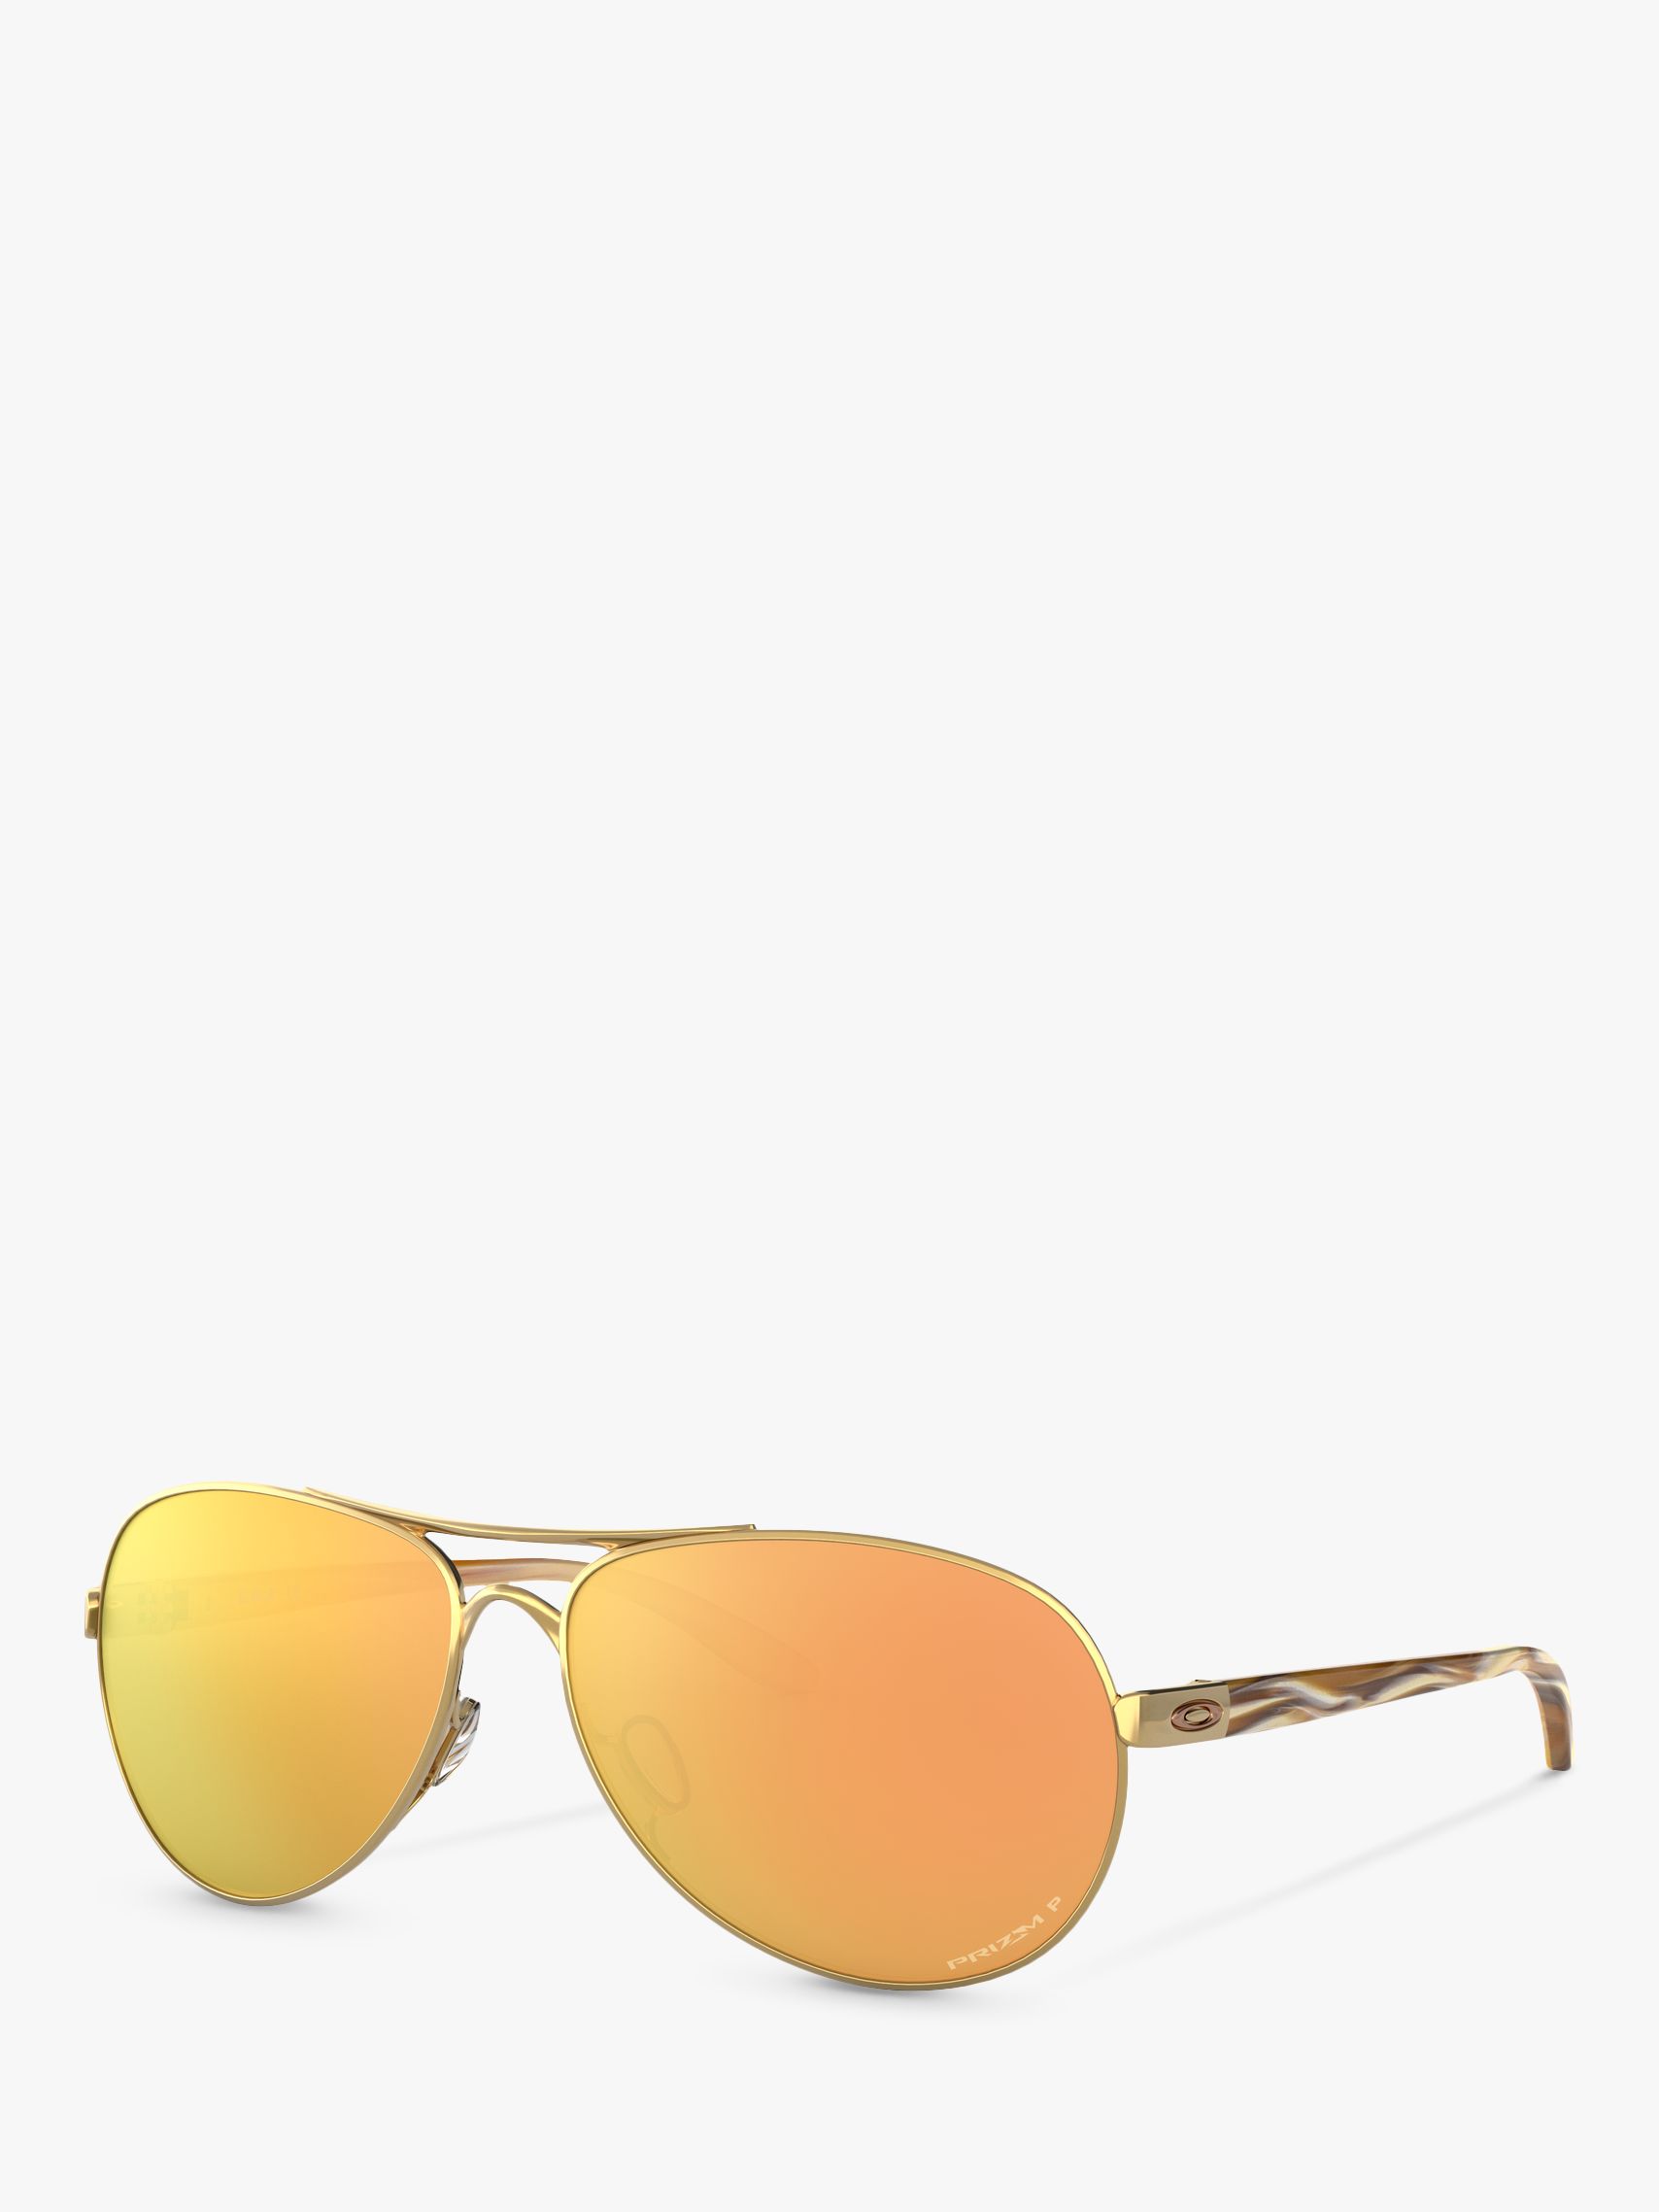 oakley aviator womens sunglasses